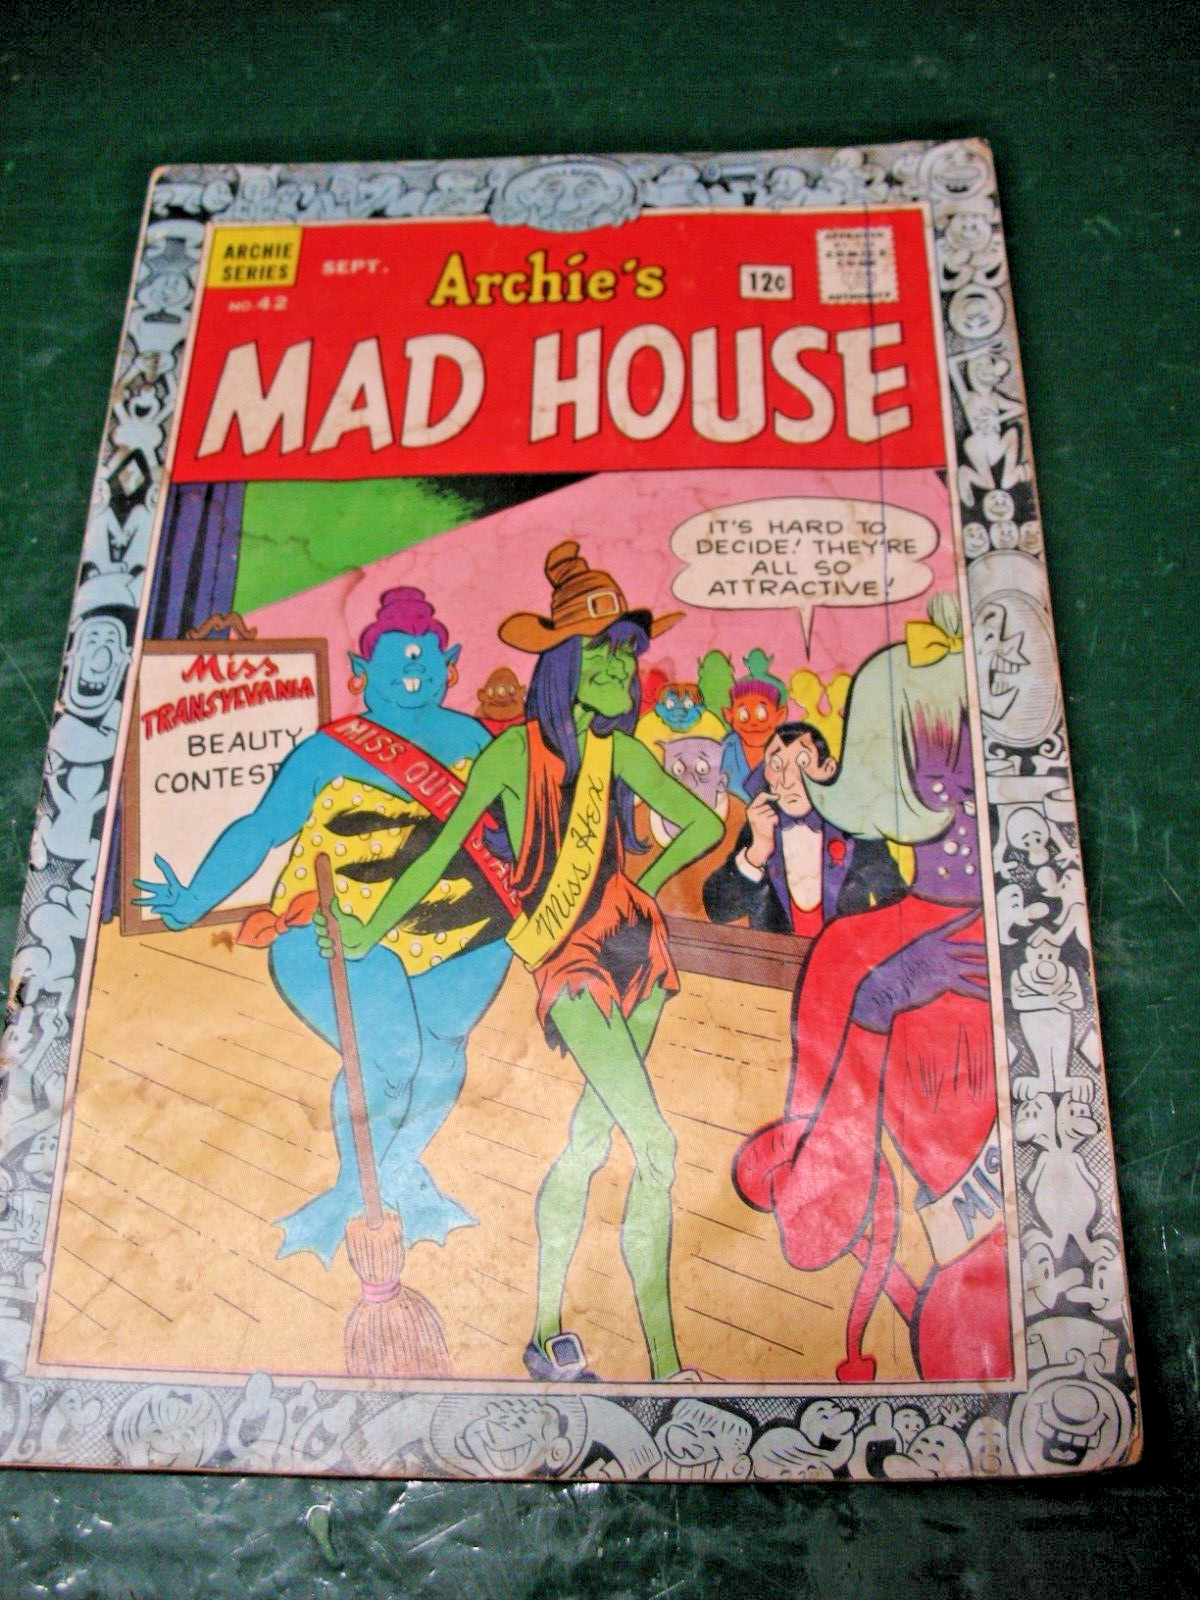 VINTAGE ARCHIE'S MAD HOUSE COMIC BOOK SEPT 1965 No. 42